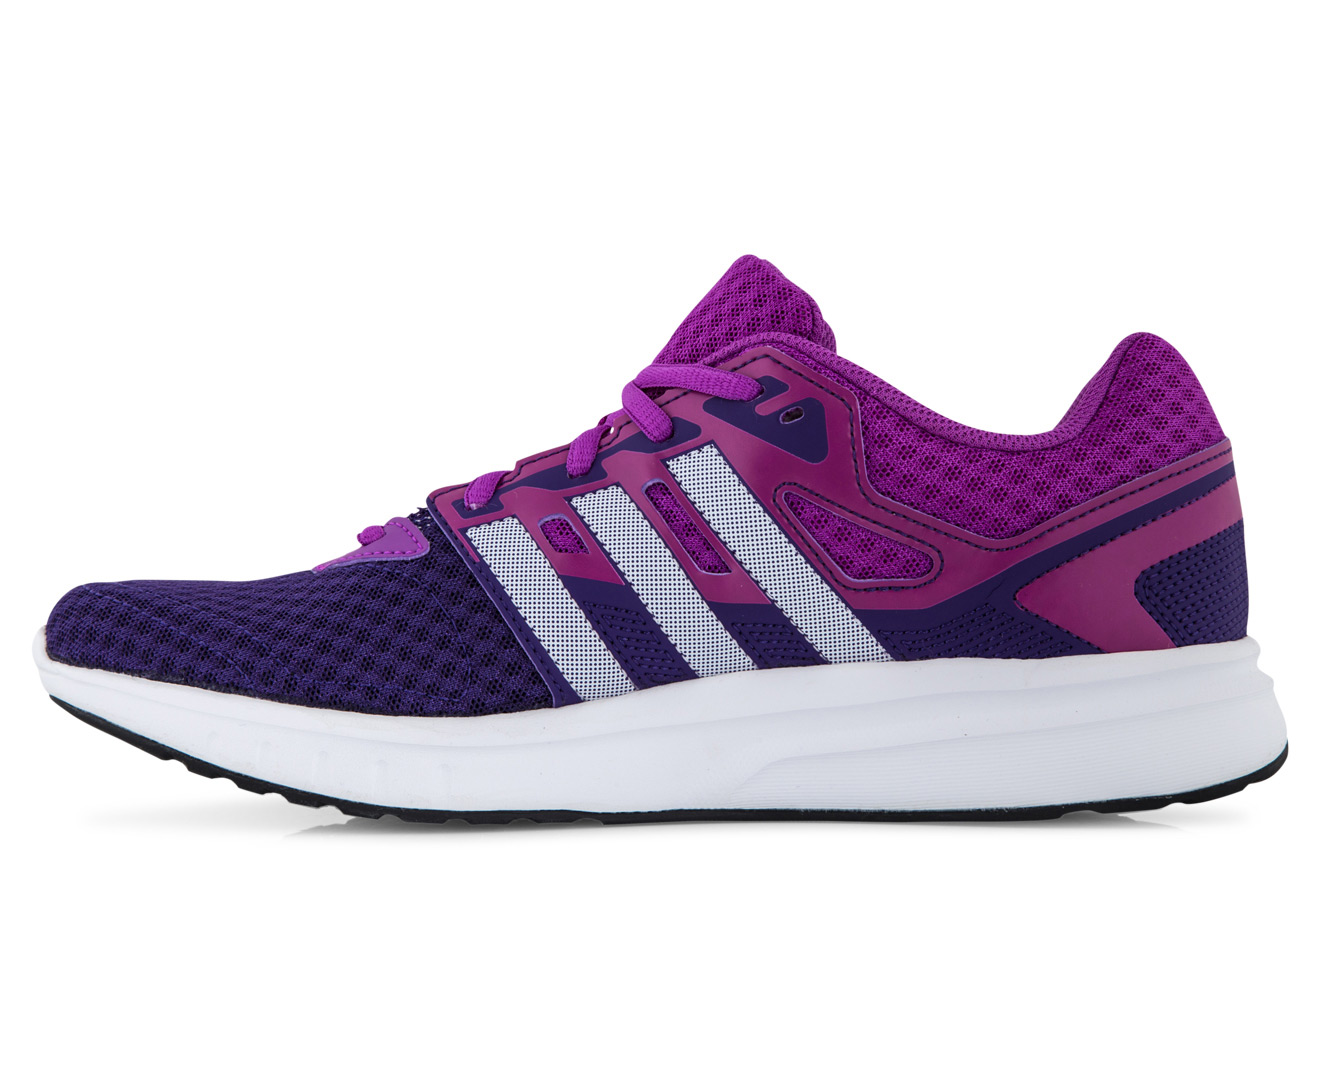 Adidas Women's Galaxy 2 Shoe - Unity Purple/White/Shock Purple | Great ...